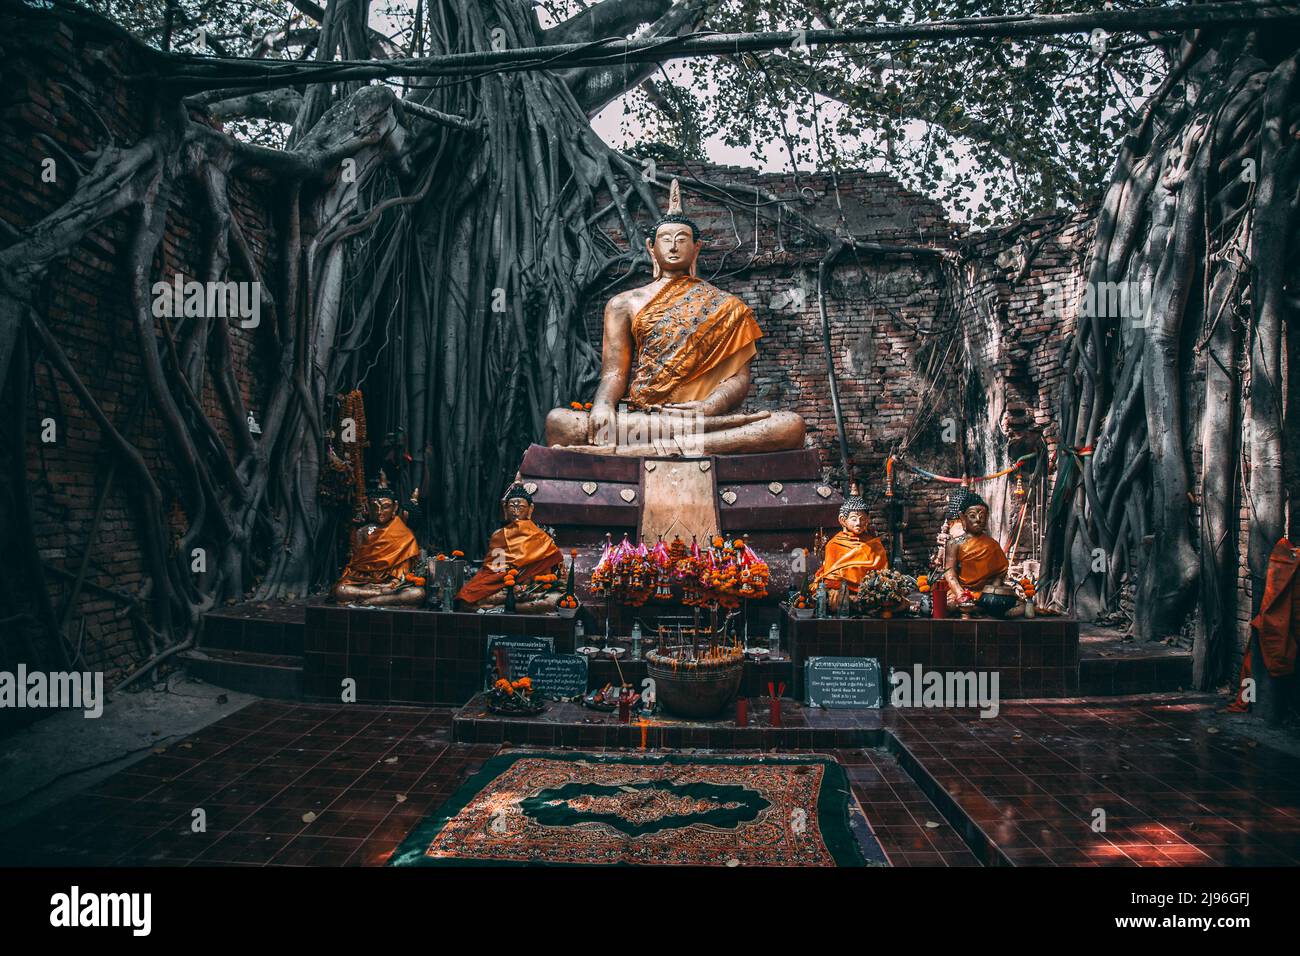 Wat Sai tempio rovina coperto da radici di banyan, a Sing Buri Thailandia Foto Stock